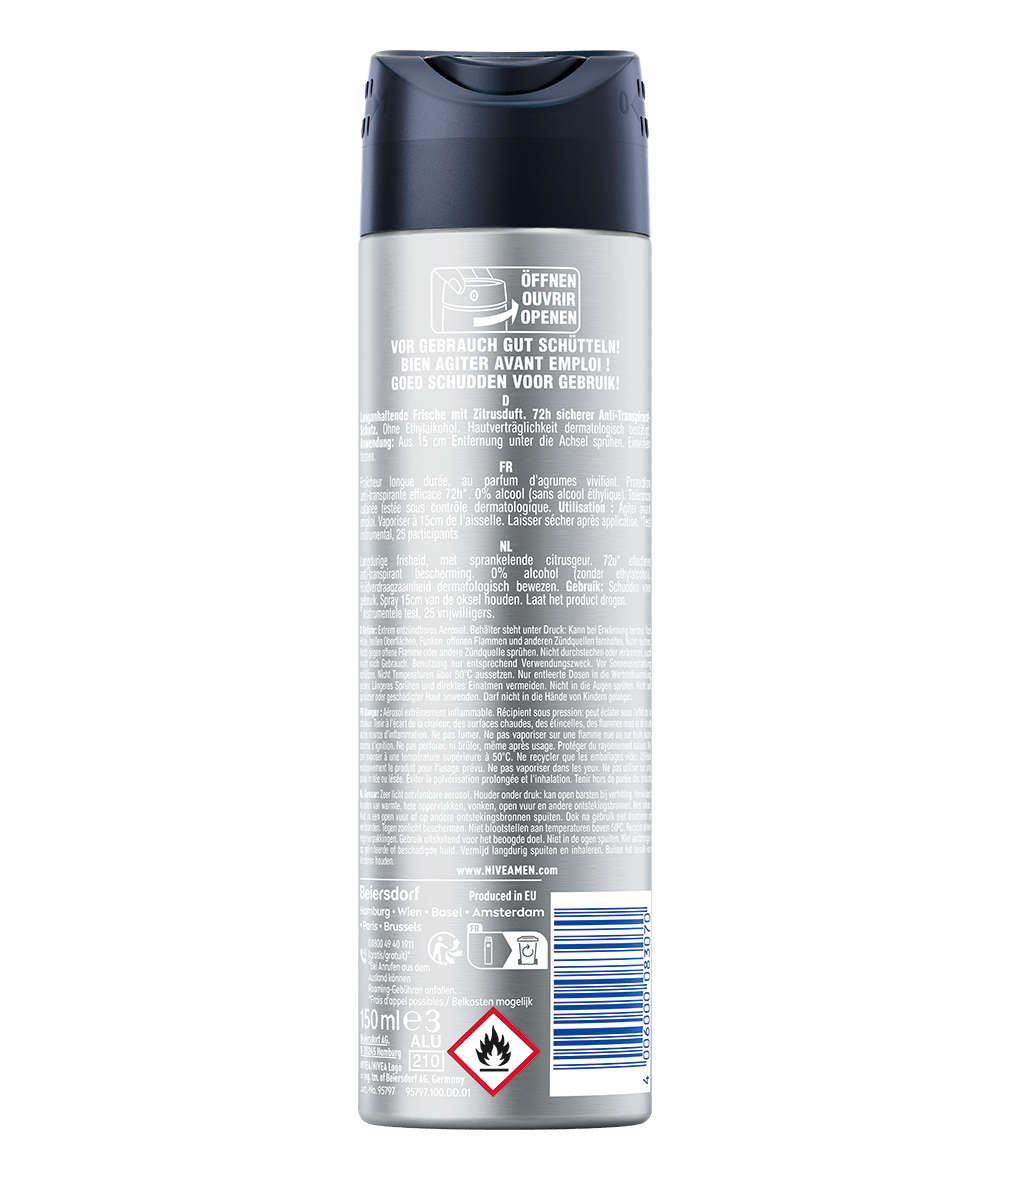 NIVEA MEN Ultra Fresh Limited Football Edition Anti-Transpirant Spray 150ml 